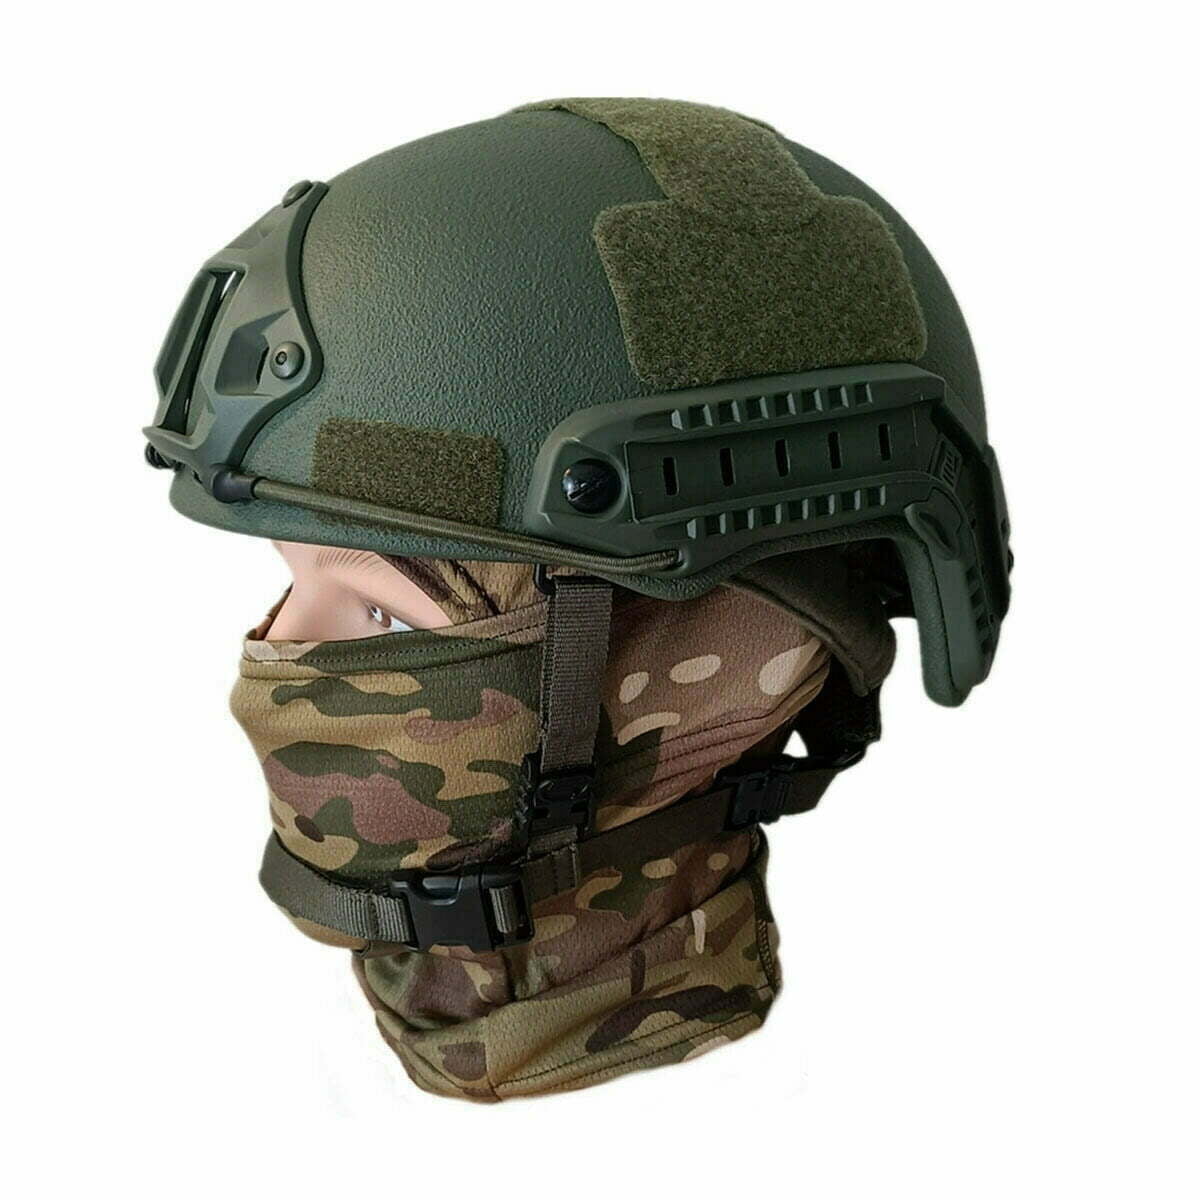 Casque militaire allemand, casque de soldat de classe IIIA, casque